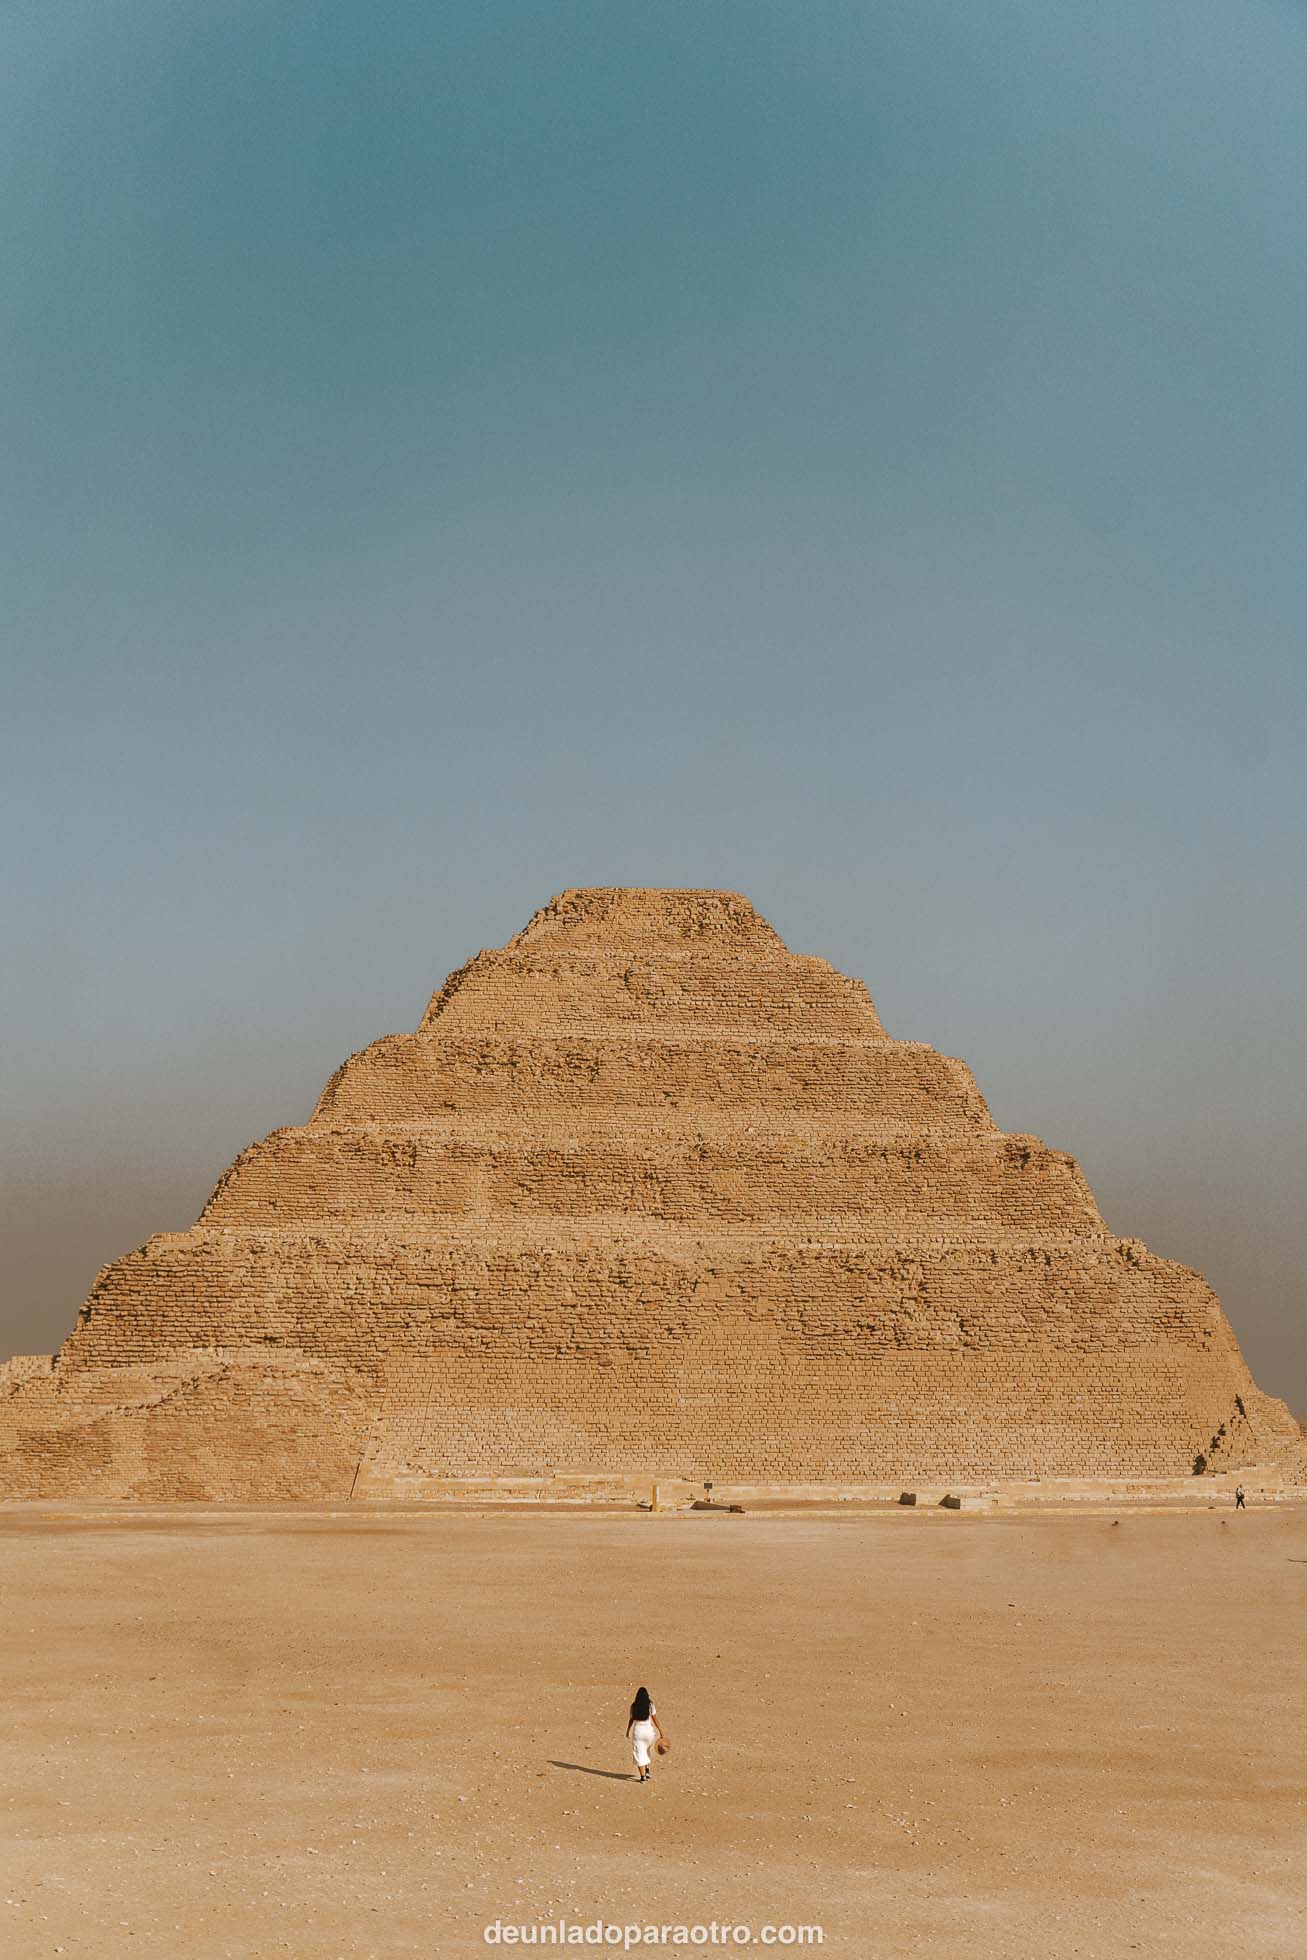 Pirámide de Saqqara, imprescindibles que ver en El Cairo